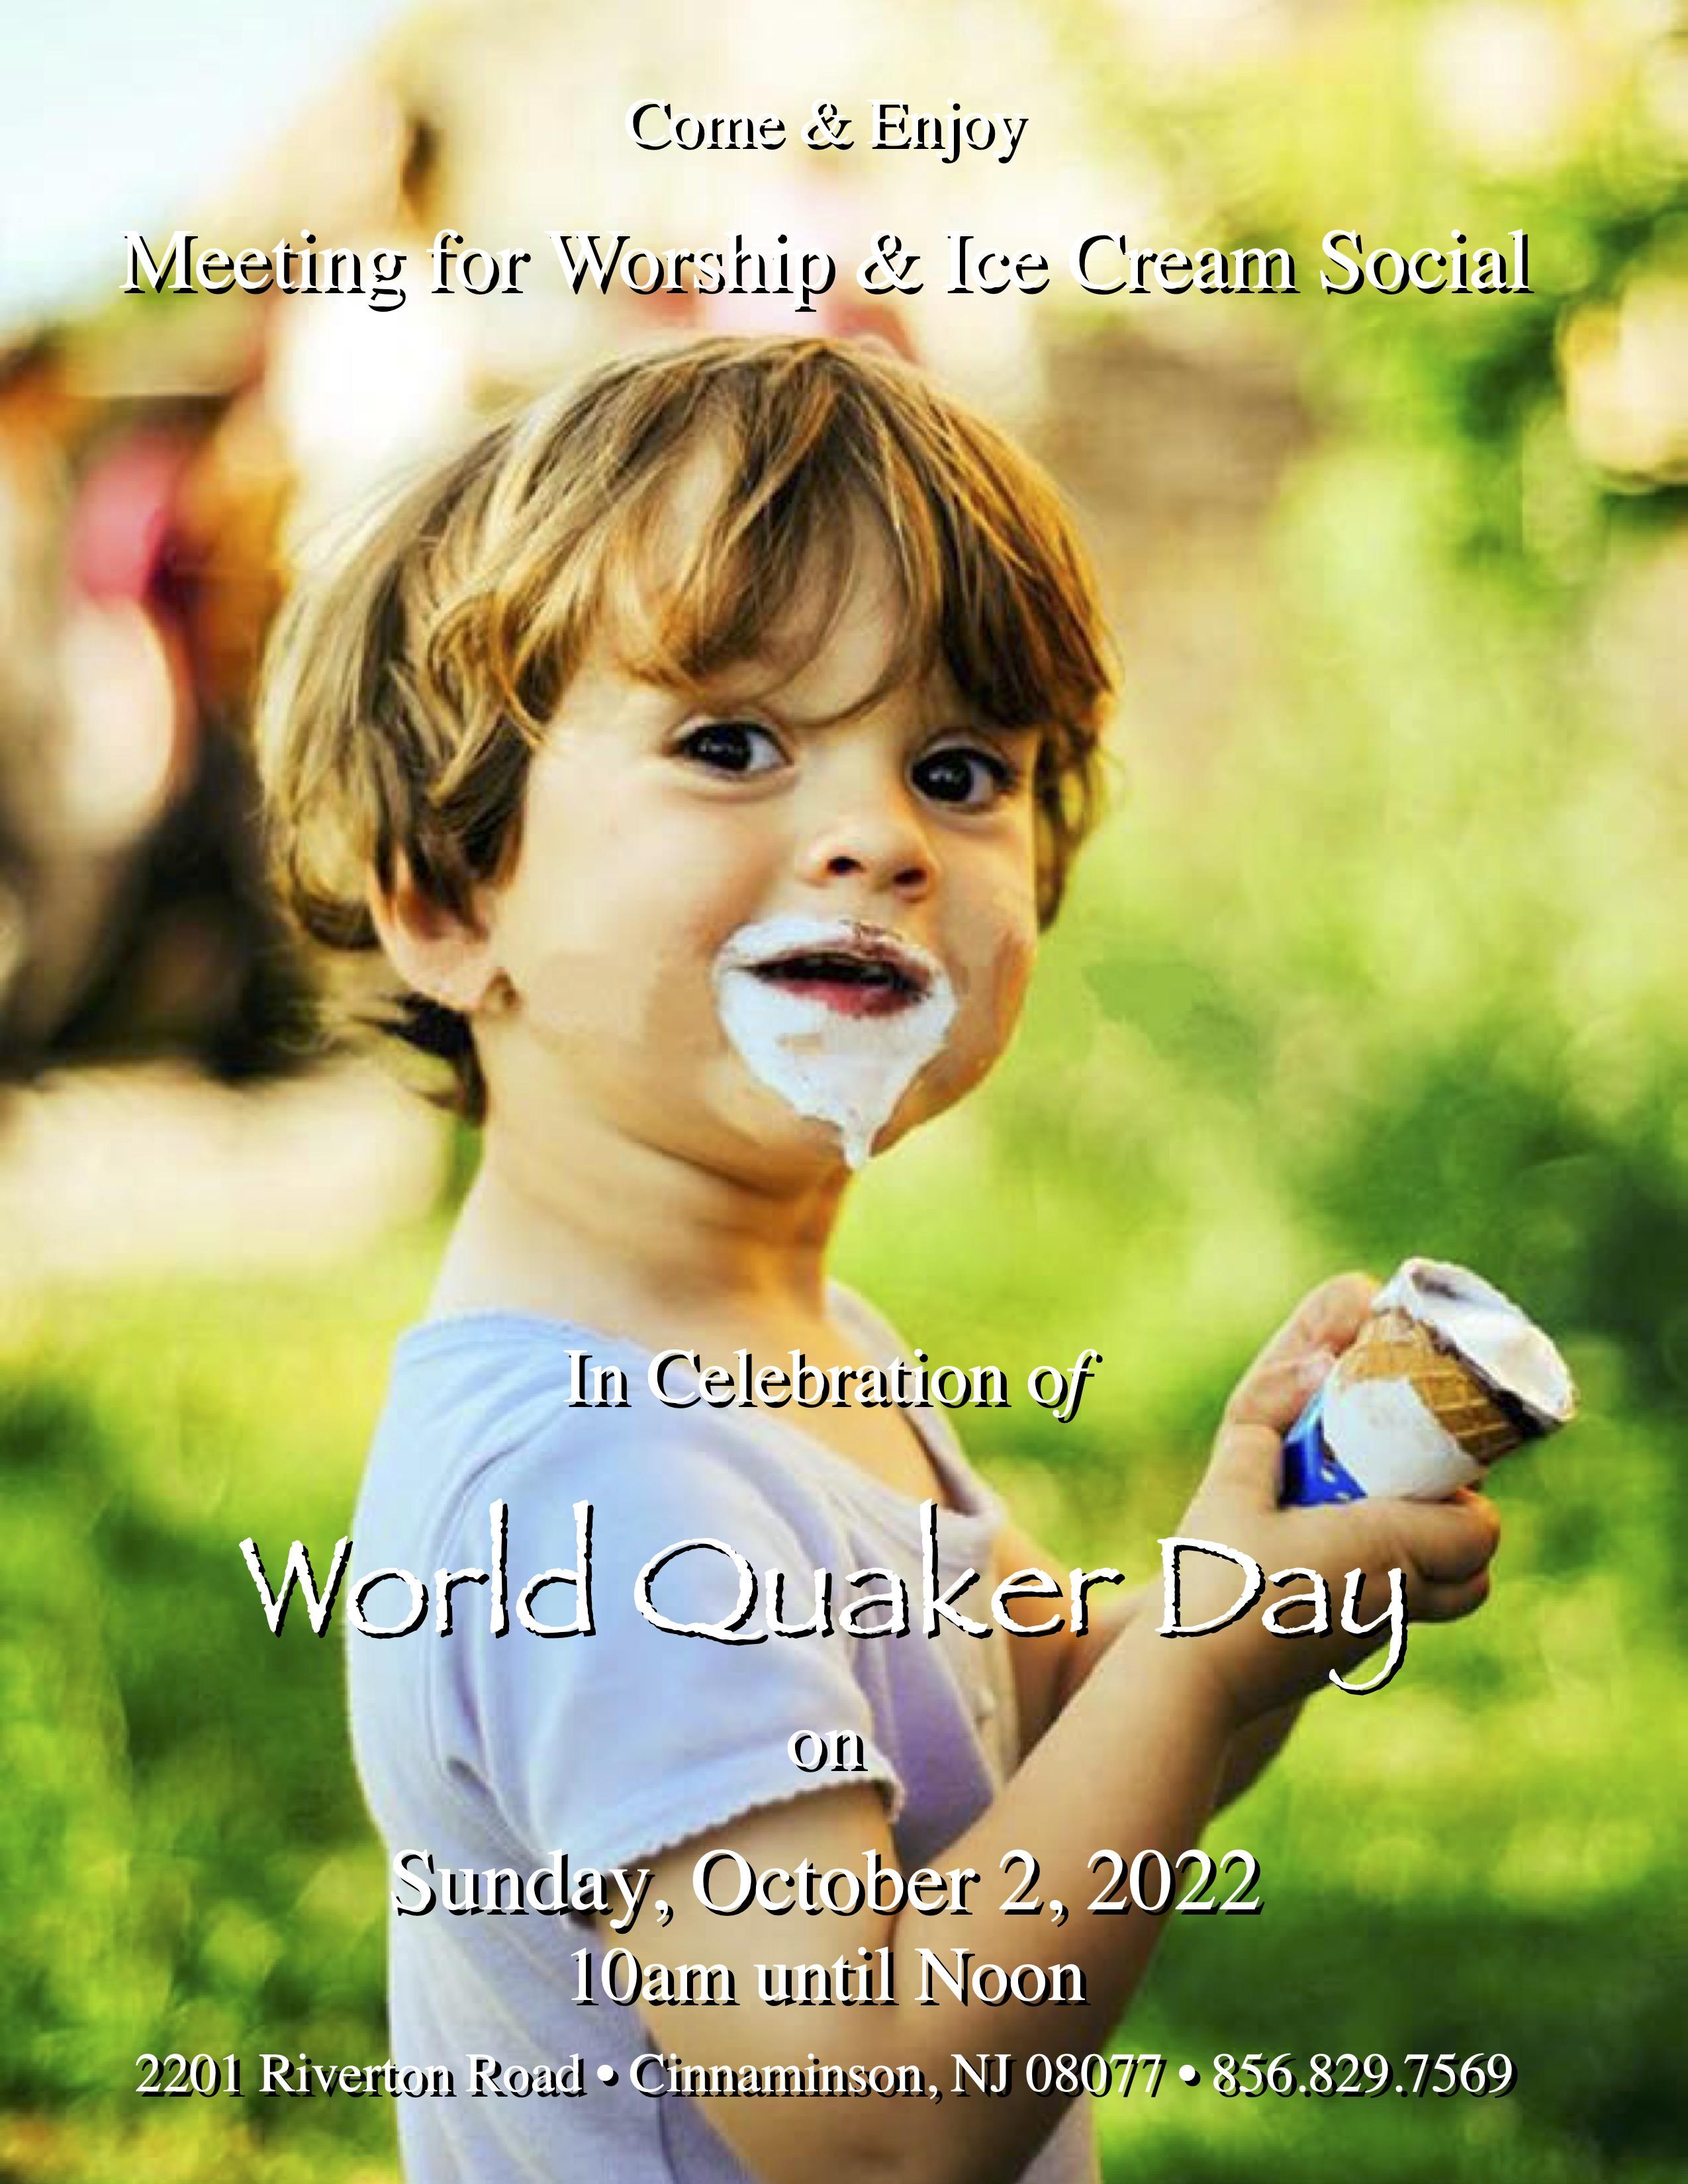 World Quaker Day